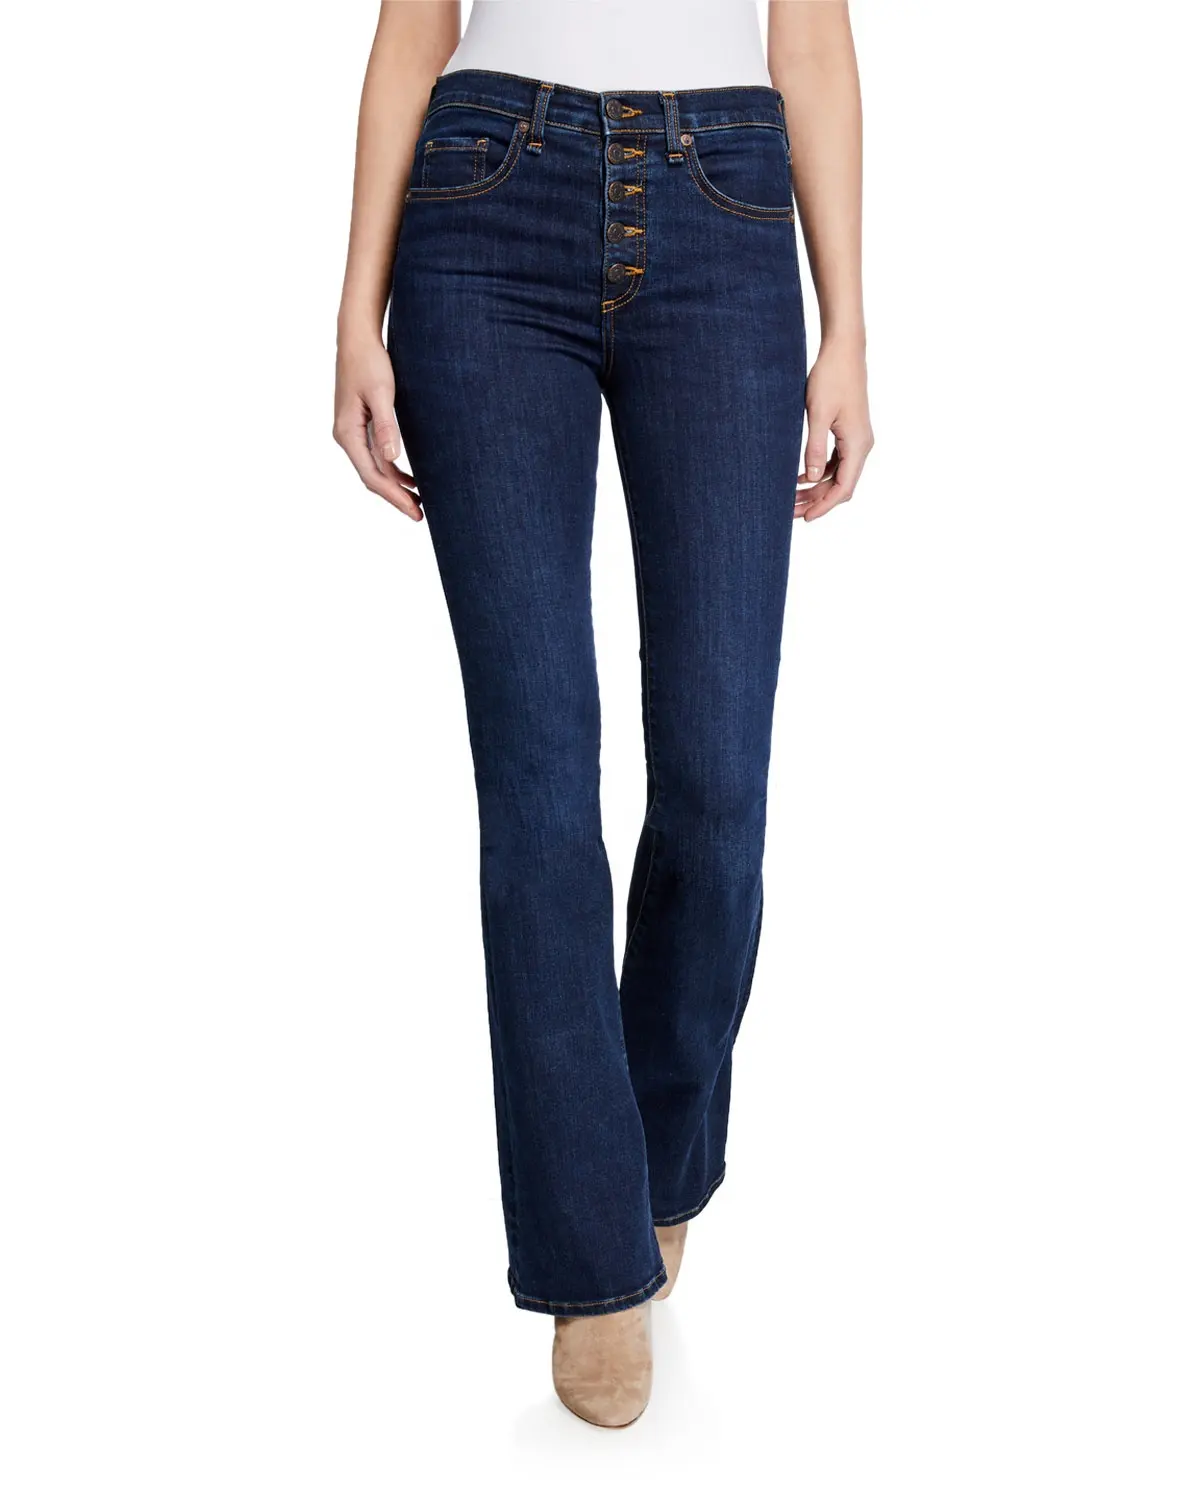 DiZNEW denim jeans manufacturer custom bootcut jeans for women